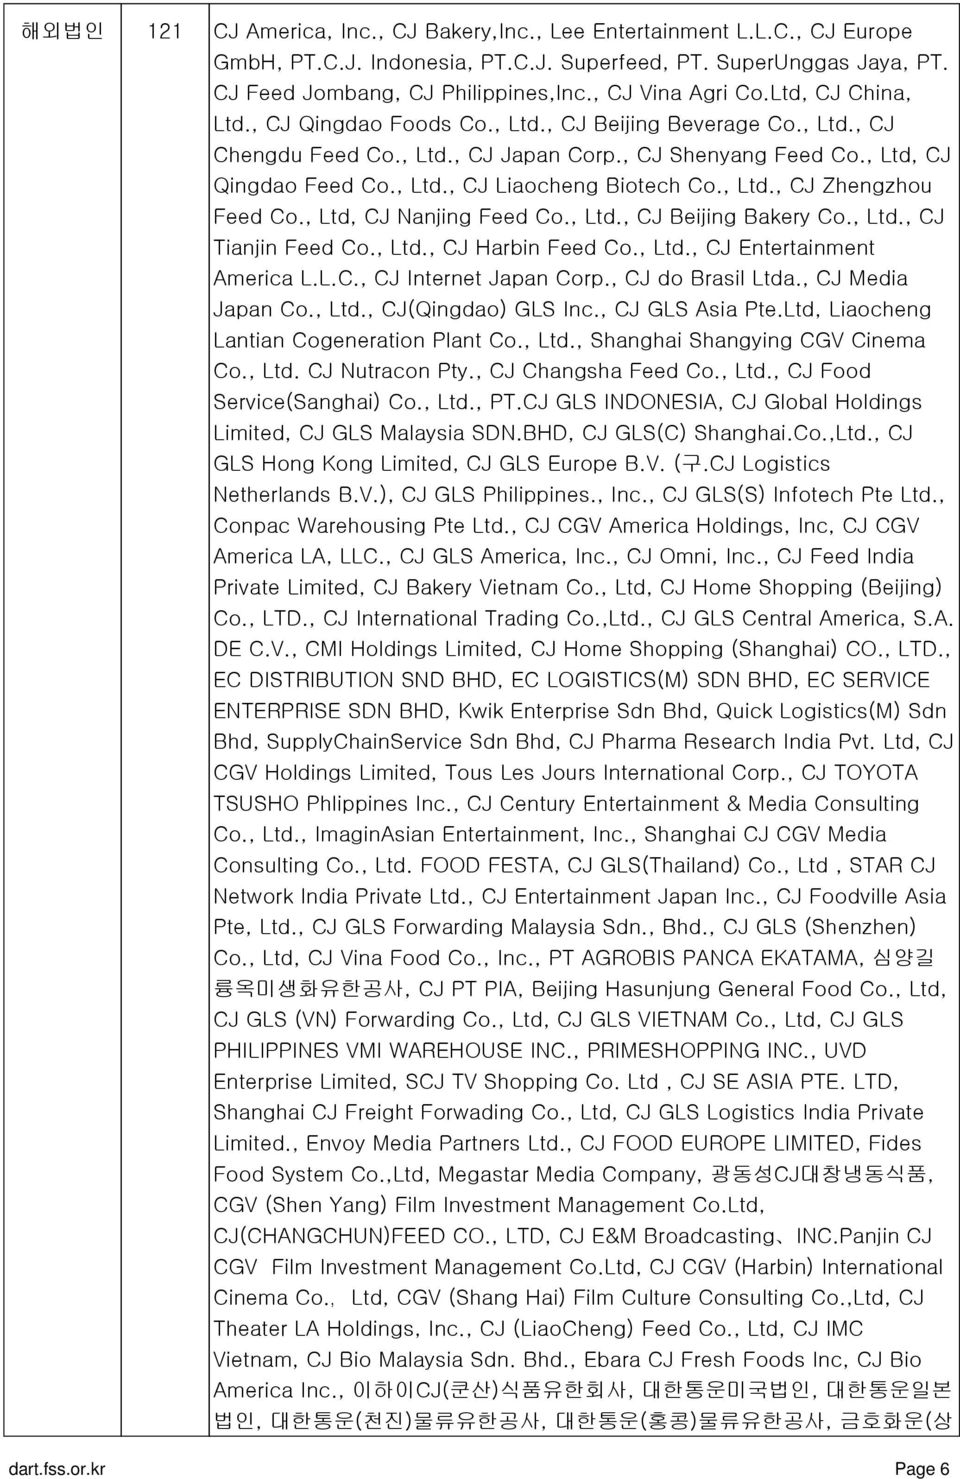 , Ltd., CJ Zhengzhou Feed Co., Ltd, CJ Nanjing Feed Co., Ltd., CJ Beijing Bakery Co., Ltd., CJ Tianjin Feed Co., Ltd., CJ Harbin Feed Co., Ltd., CJ Entertainment America L.L.C., CJ Internet Japan Corp.